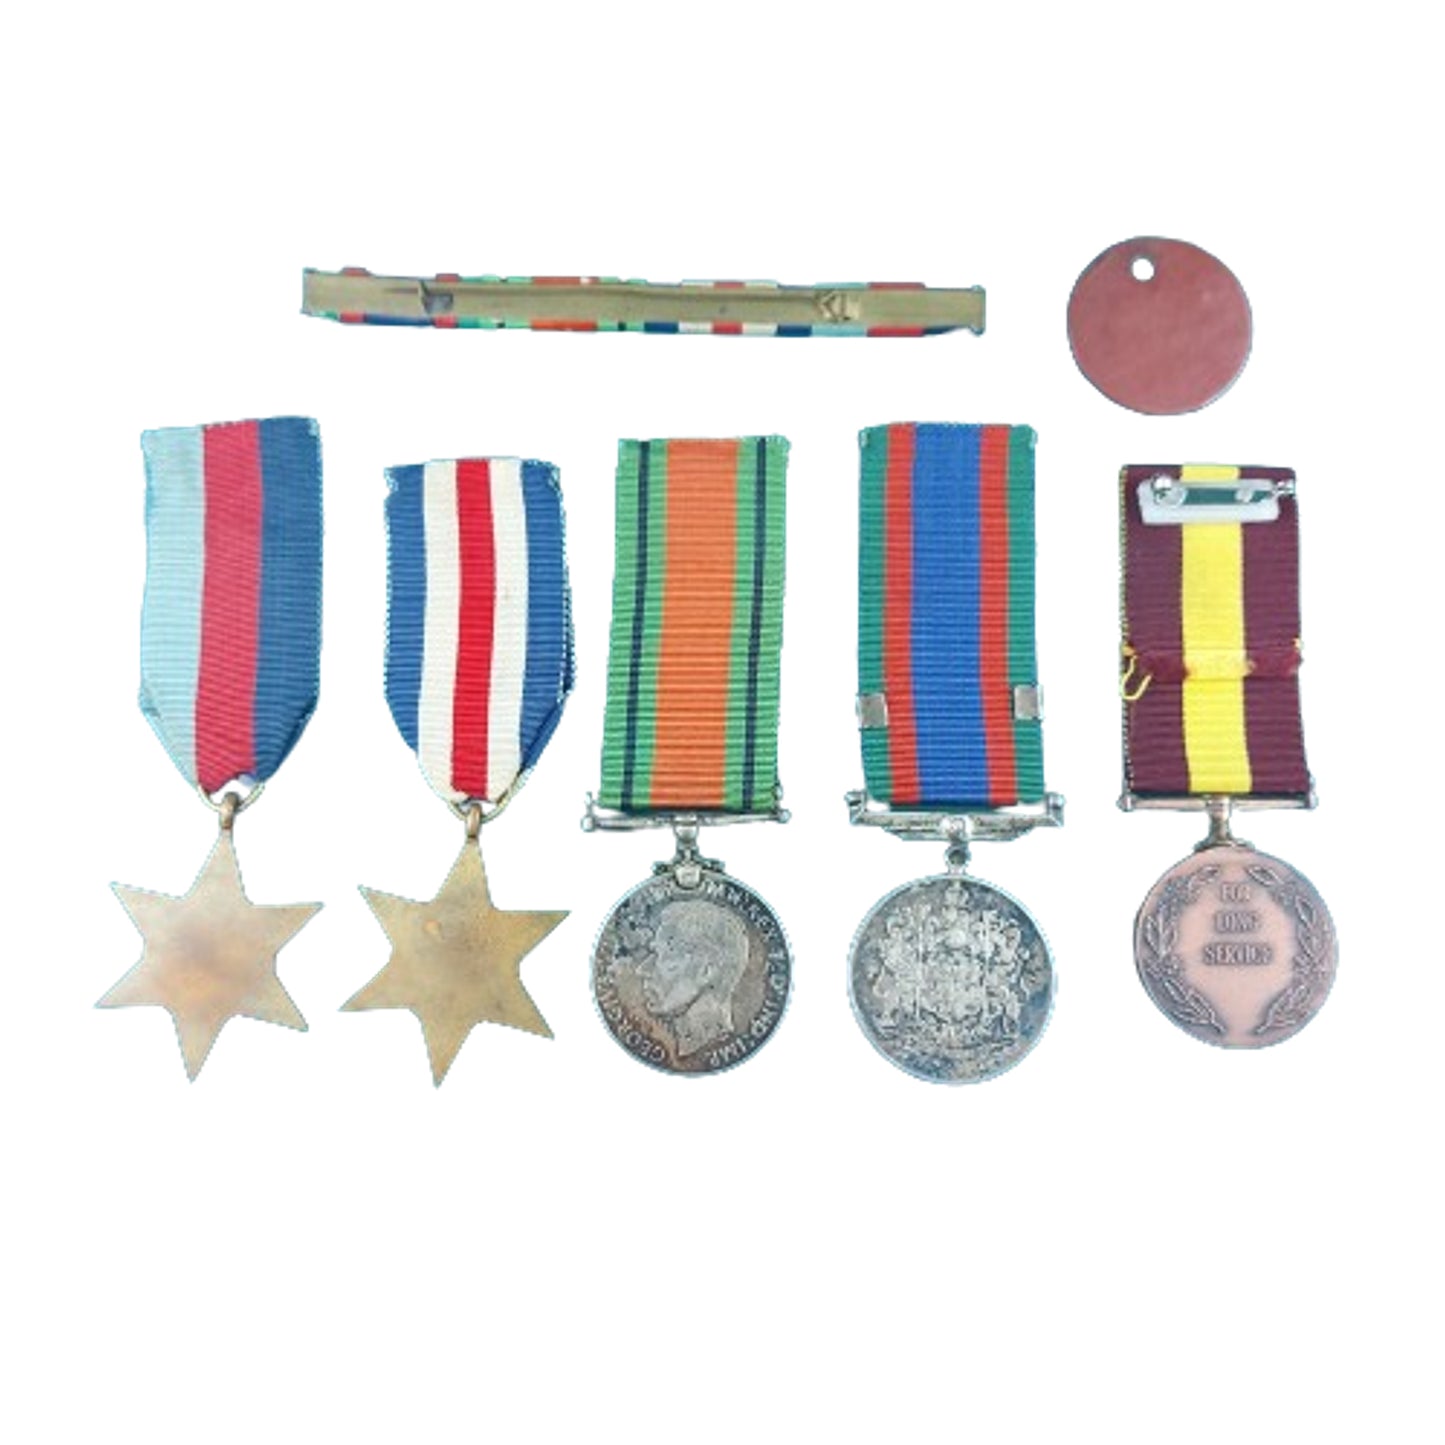 WW2 Canadian Medal Set -RCE Royal Canadian Engineers -Aboriginal Canadian